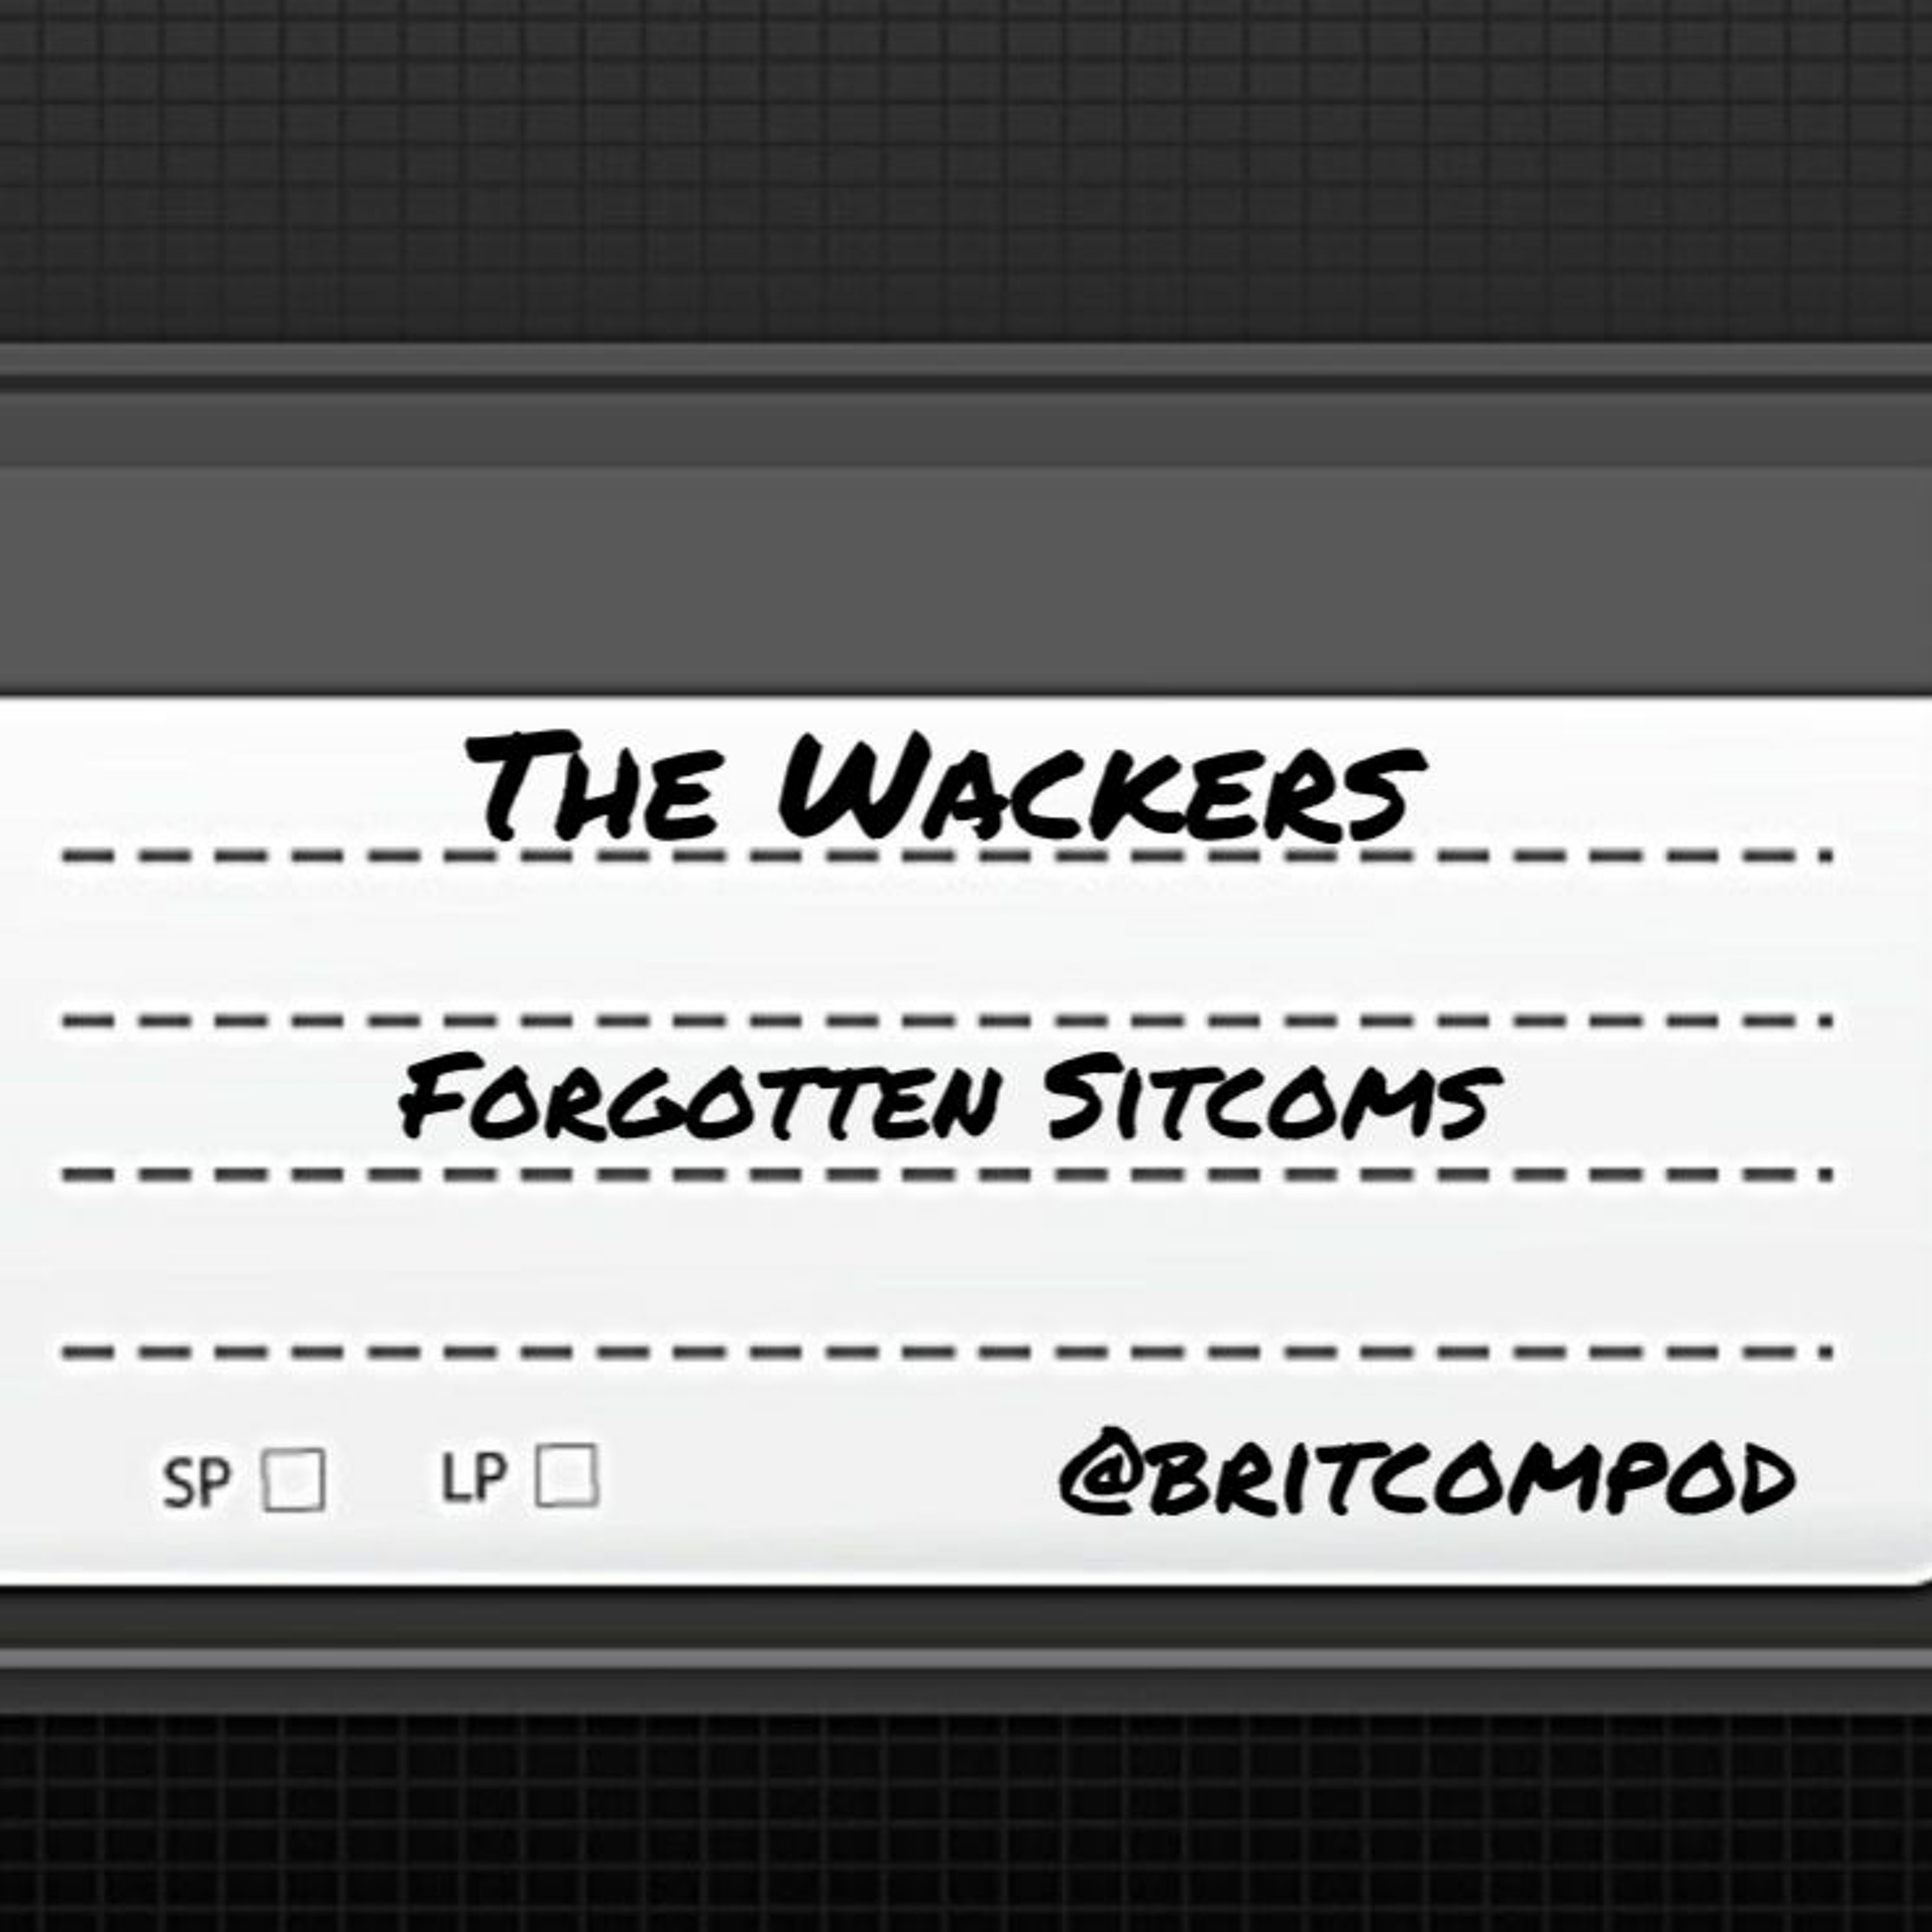 The Wackers - Forgotten Sitcoms